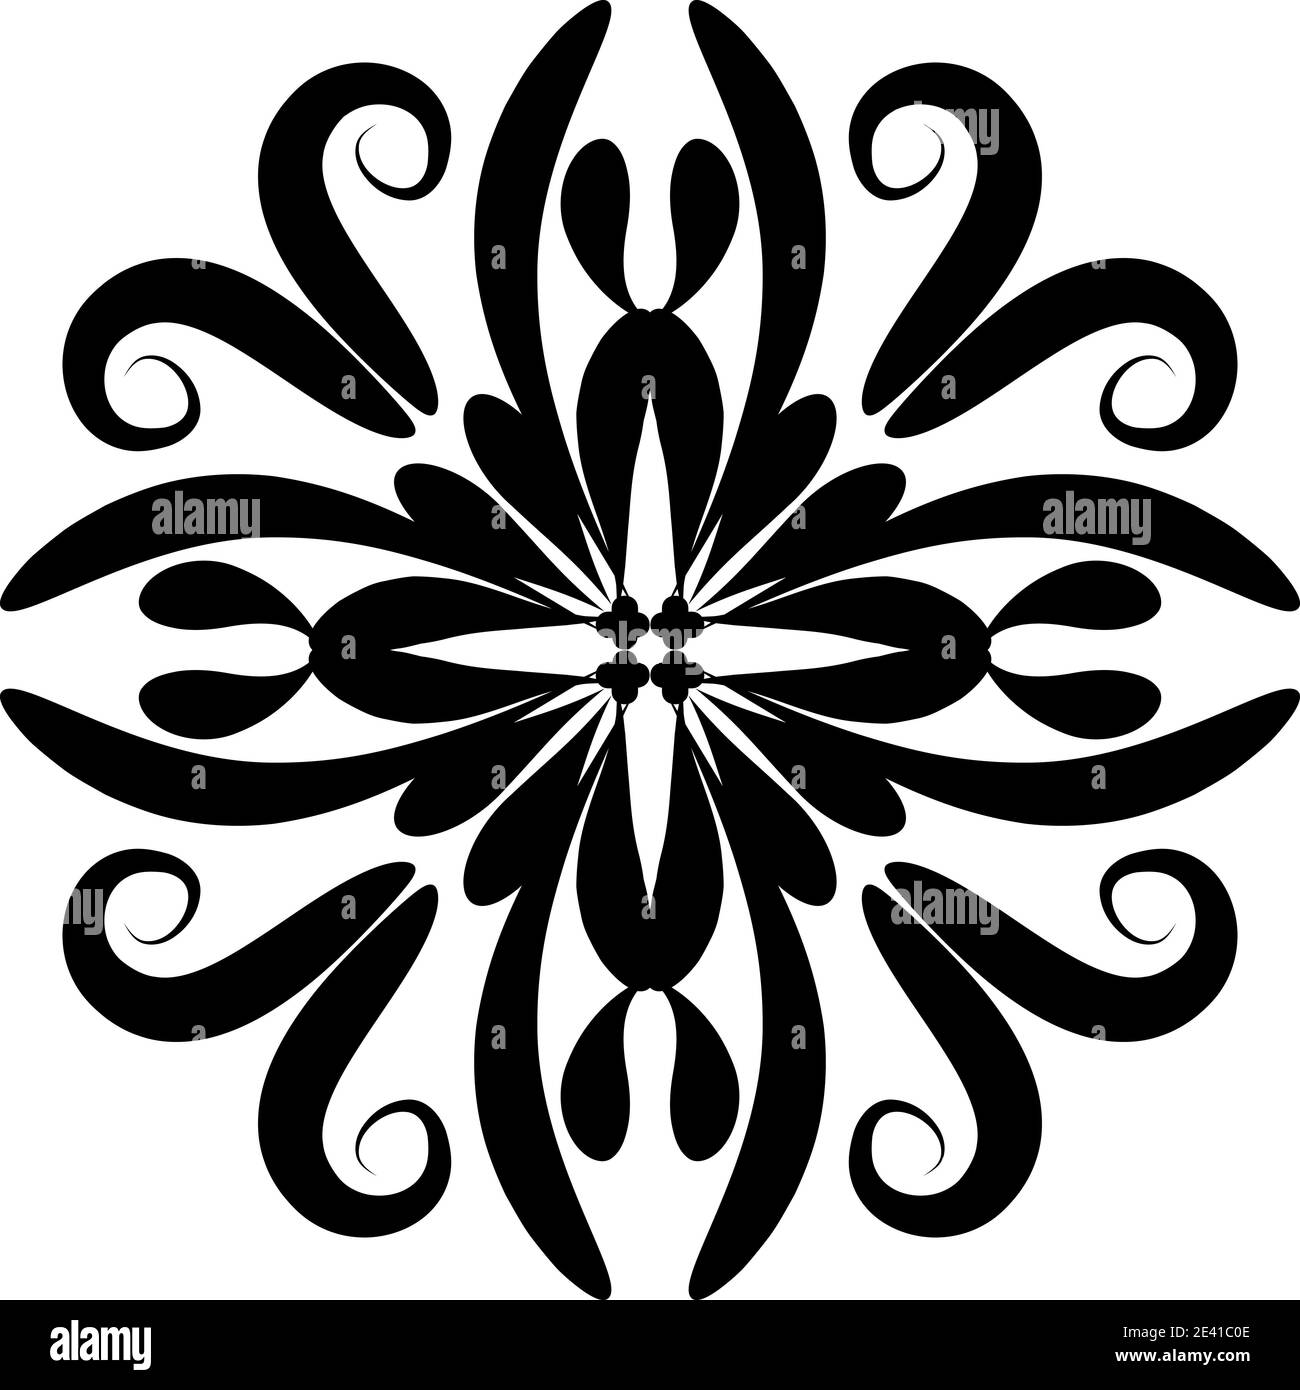 Mandala geometric pattern with black lines isolated on white background Stock Photo